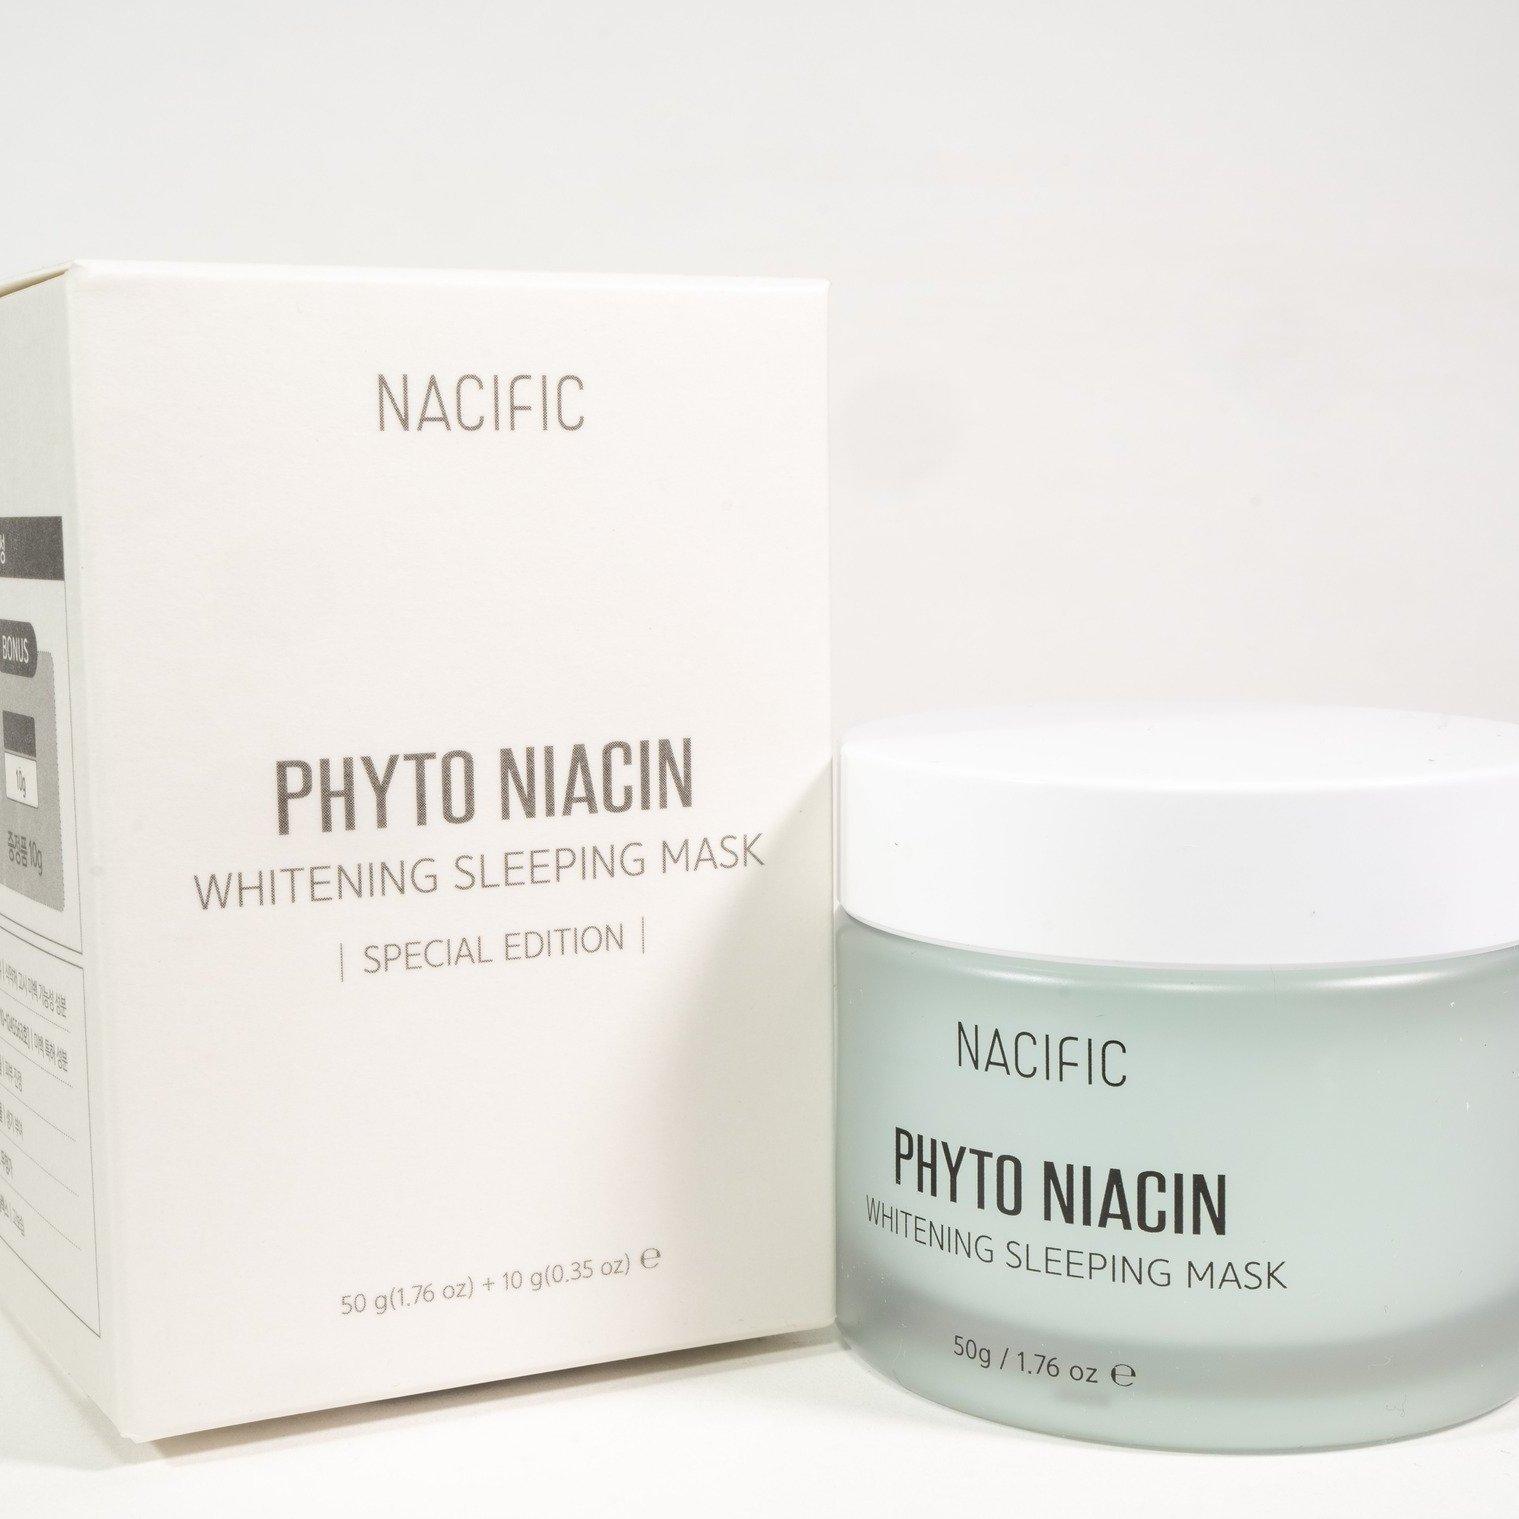 NACIFIC Phyto Niacin Whitening Sleeping Mask 50g